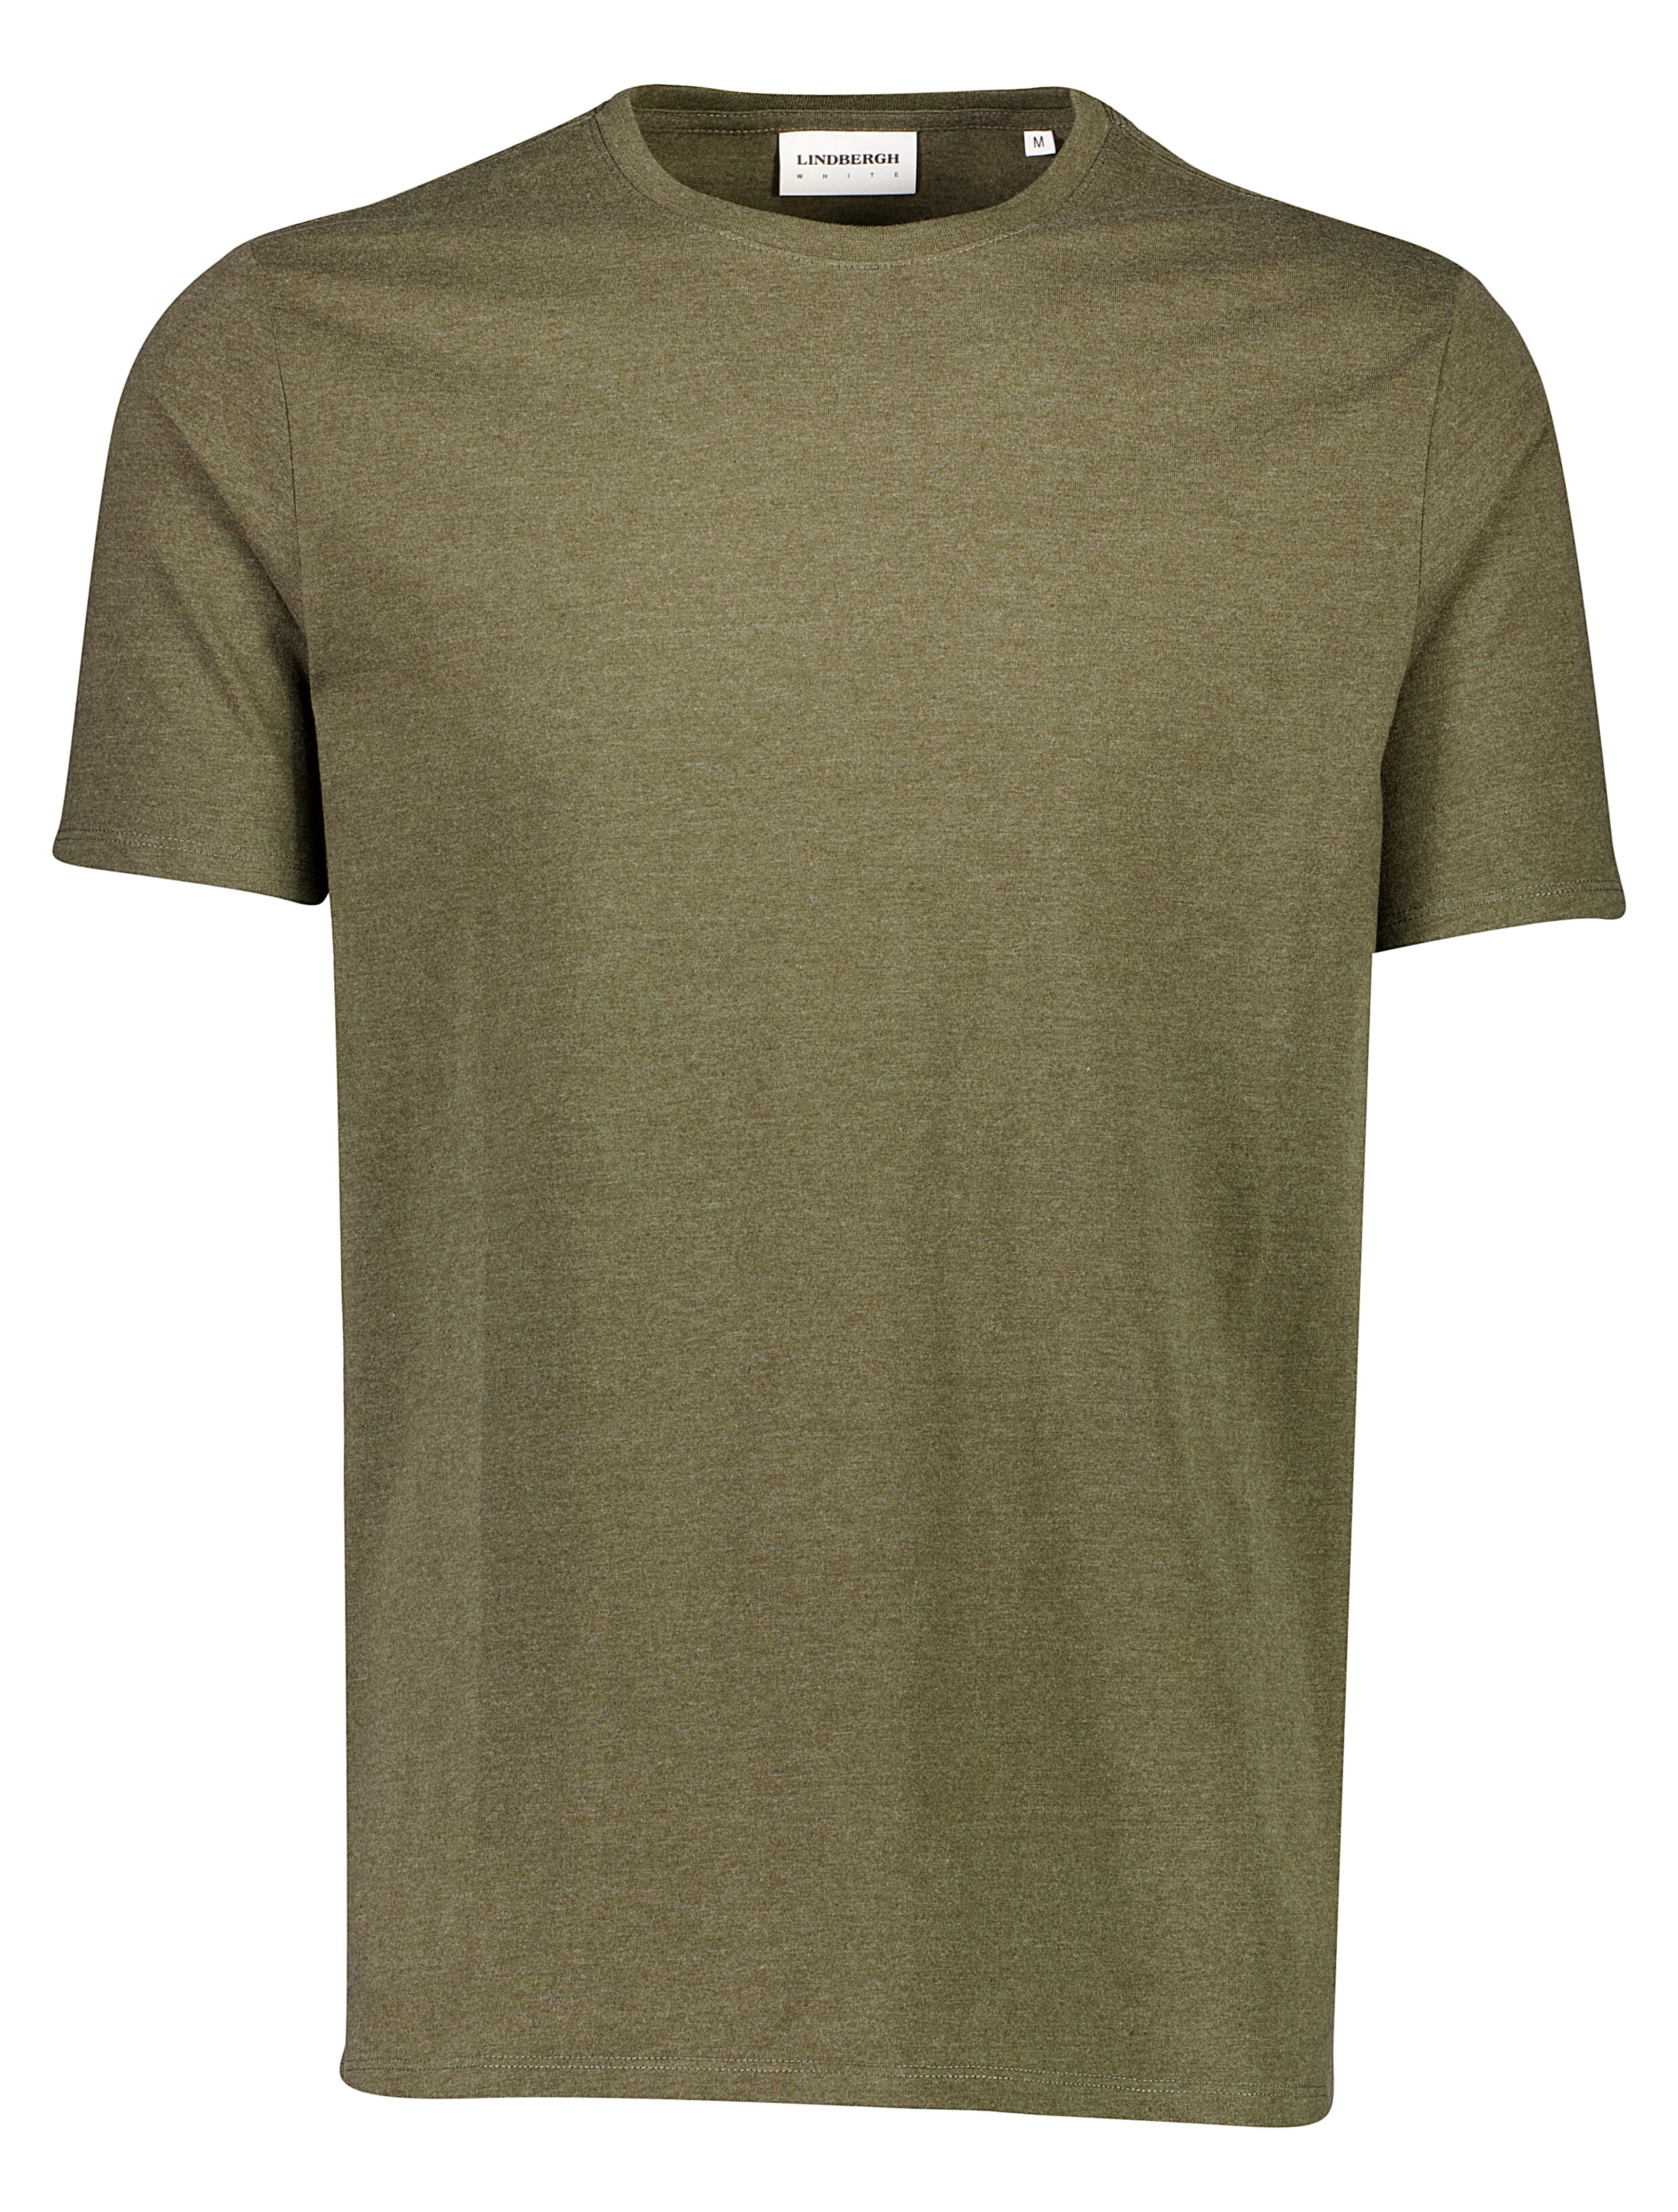 Lindbergh T-Shirt grün / army mel